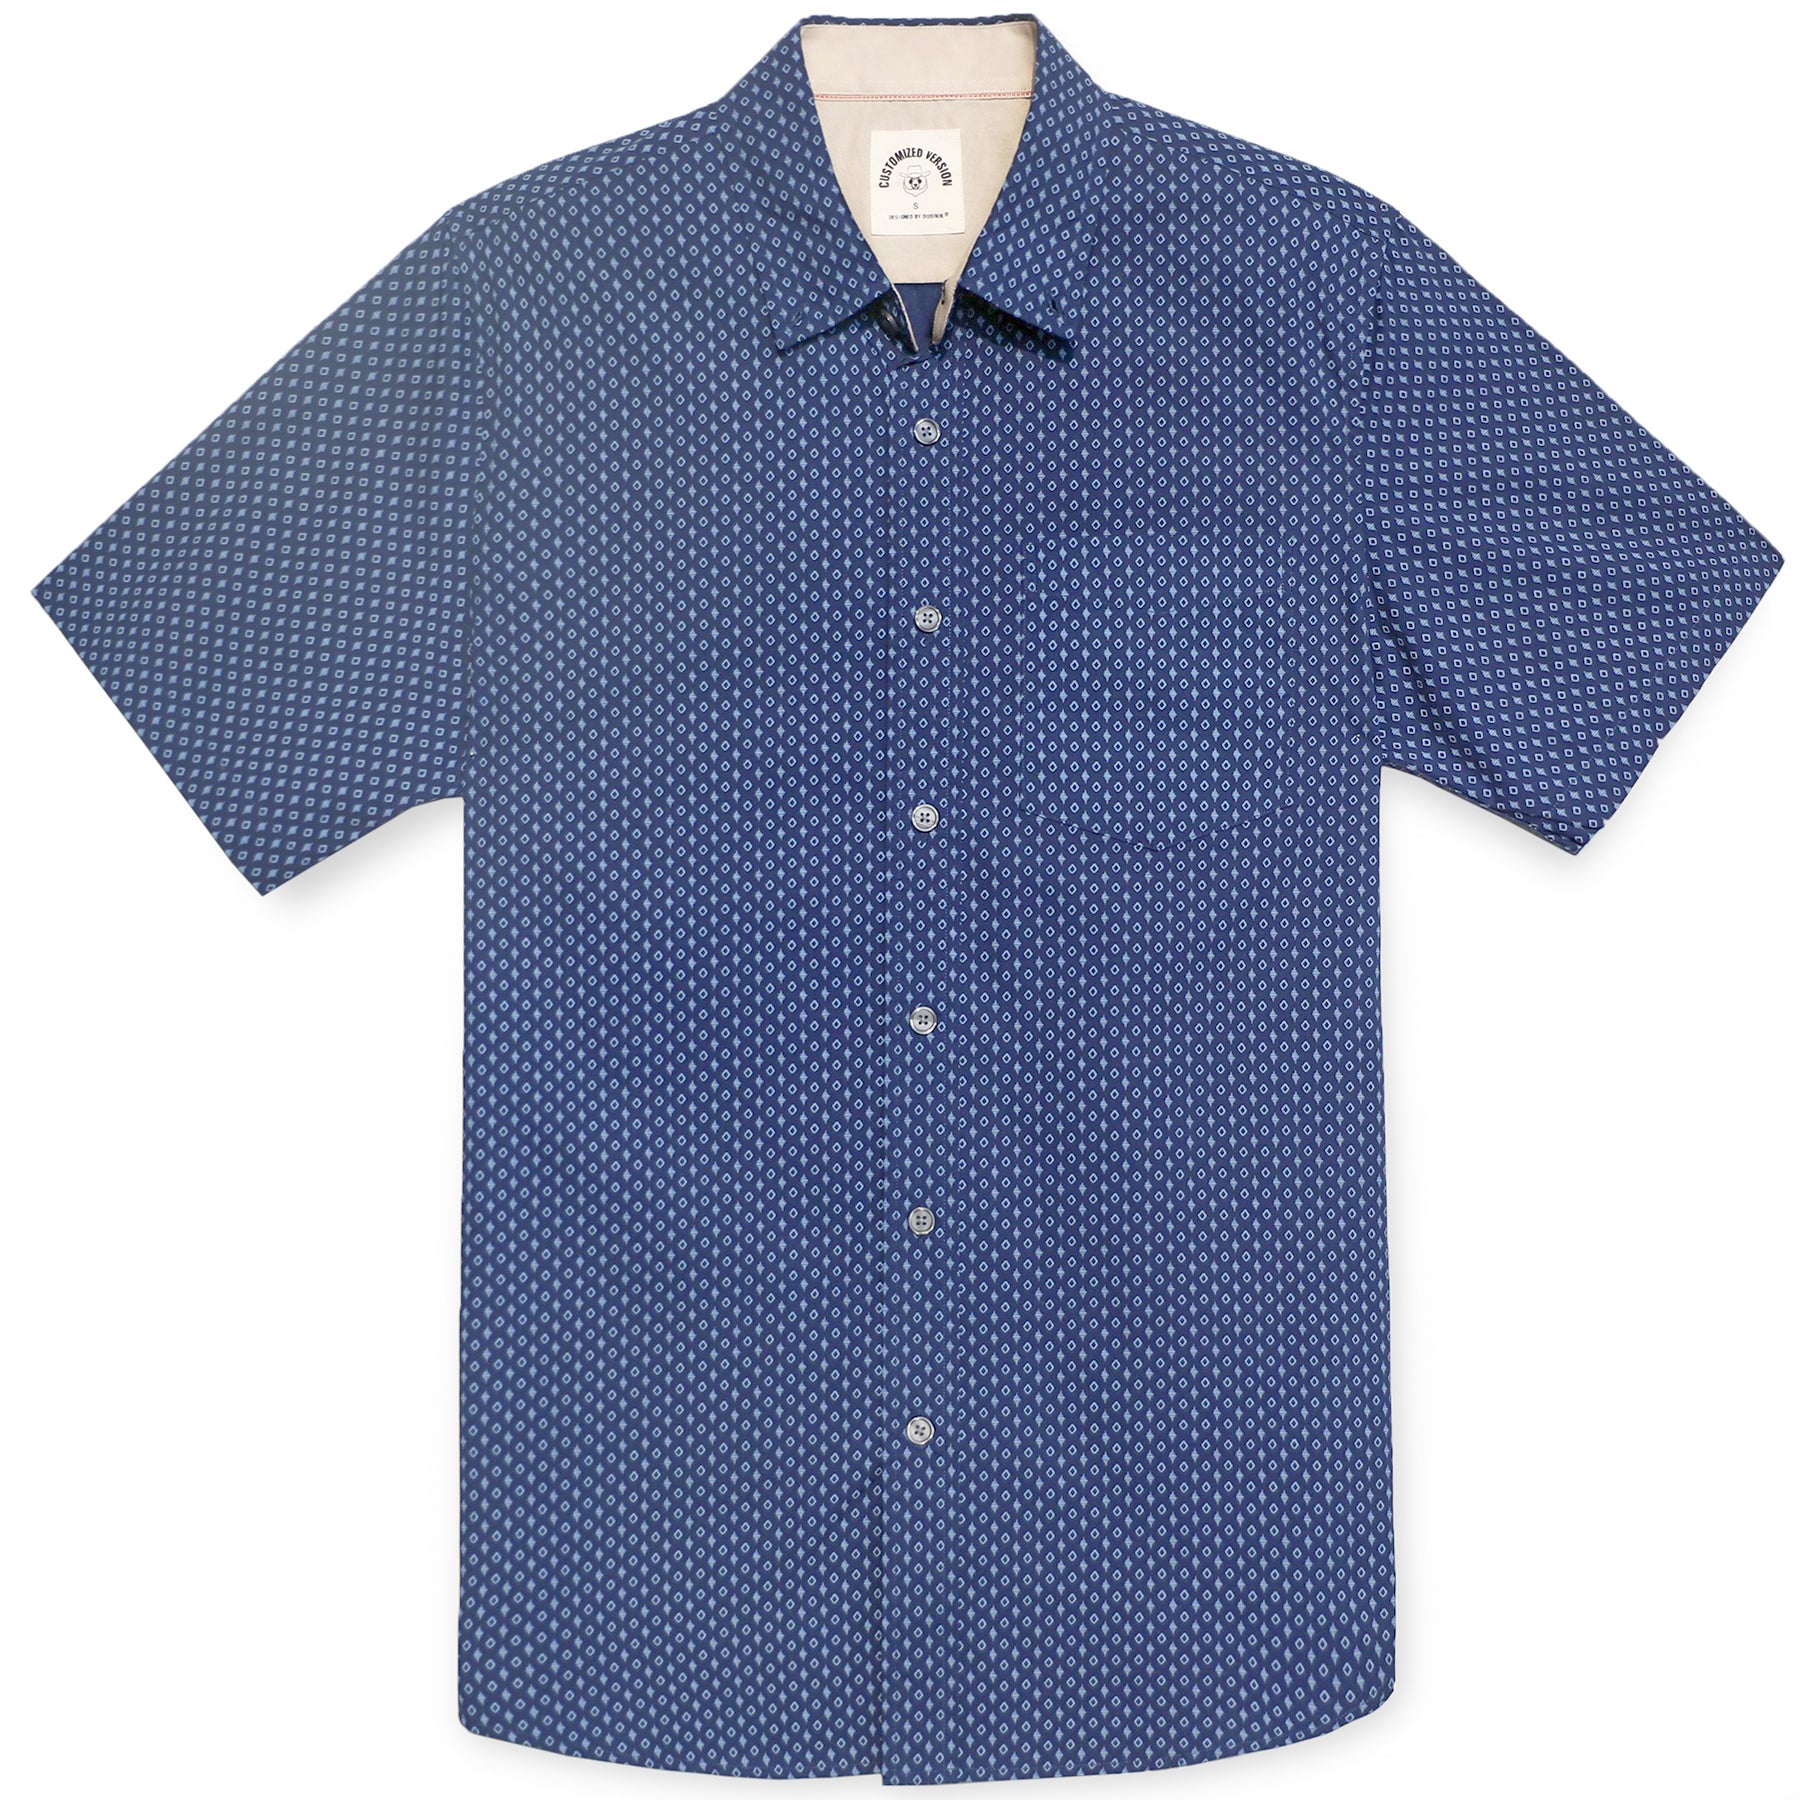 Men's casual short-sleeved cotton shirt #0101